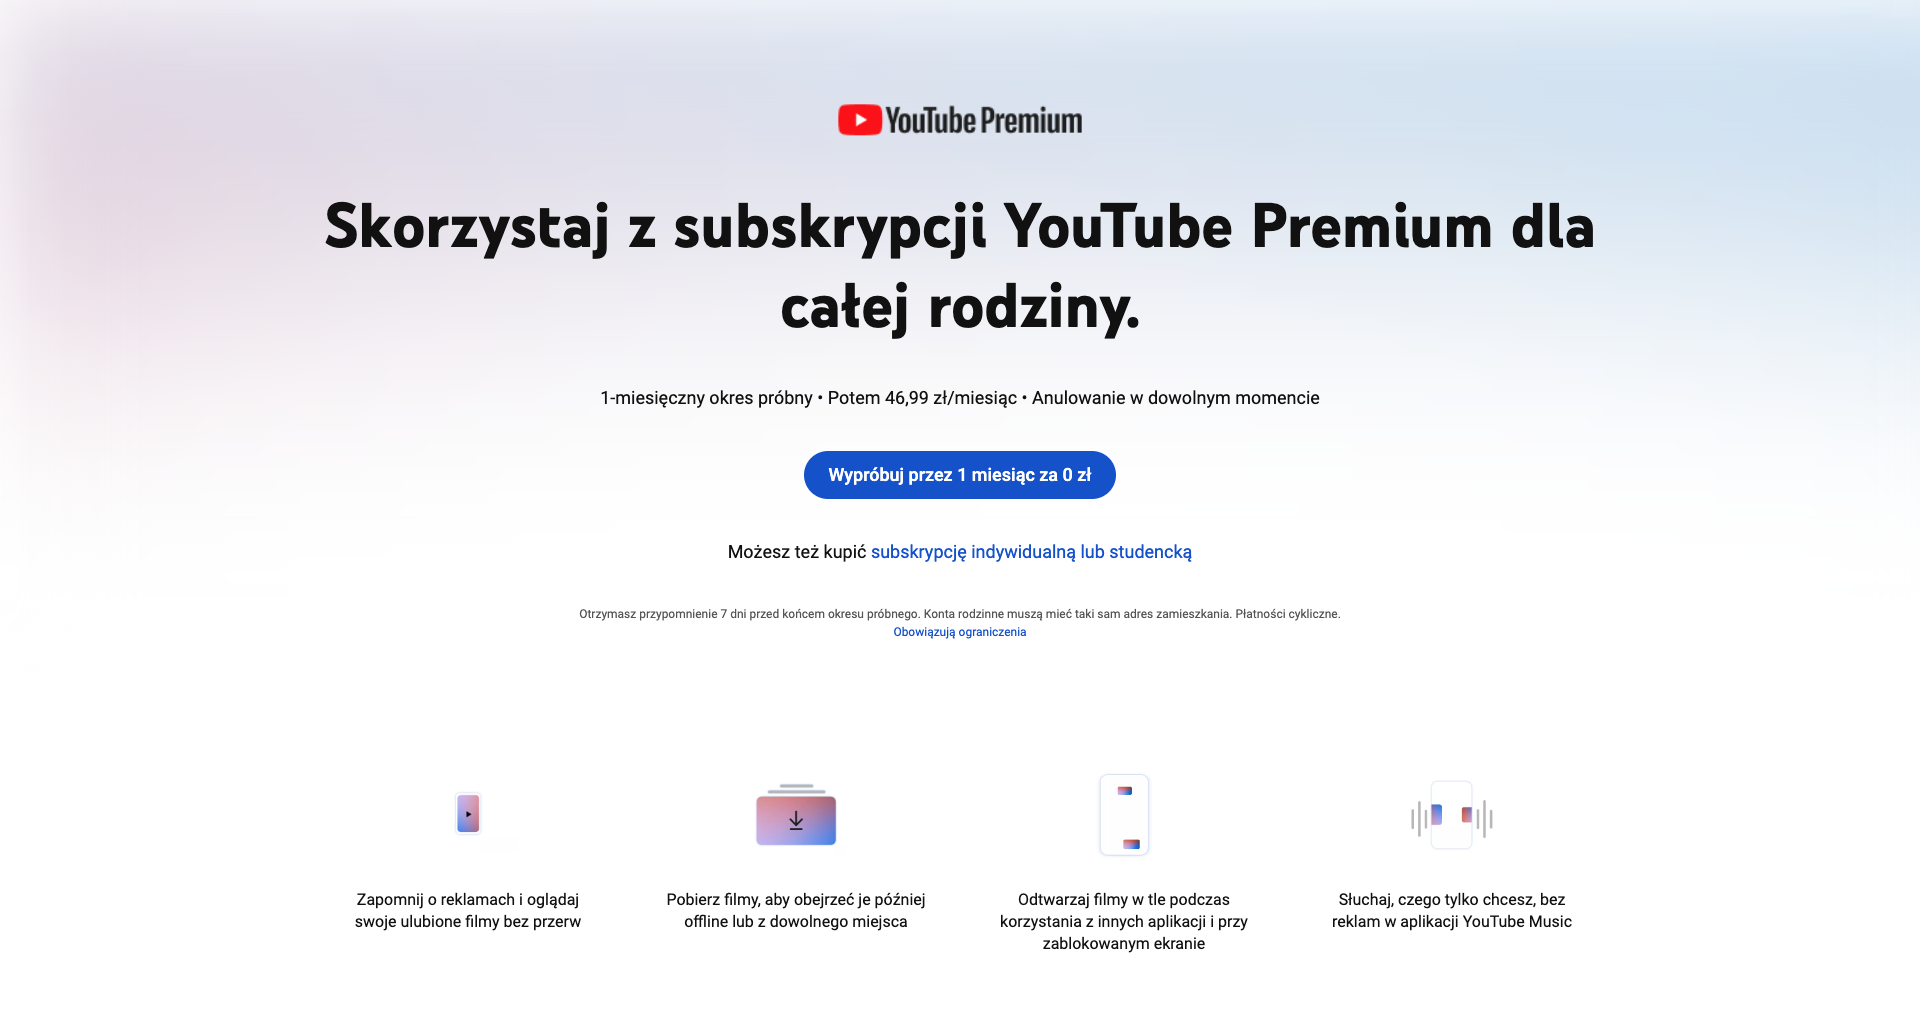 YouTube Premium Family